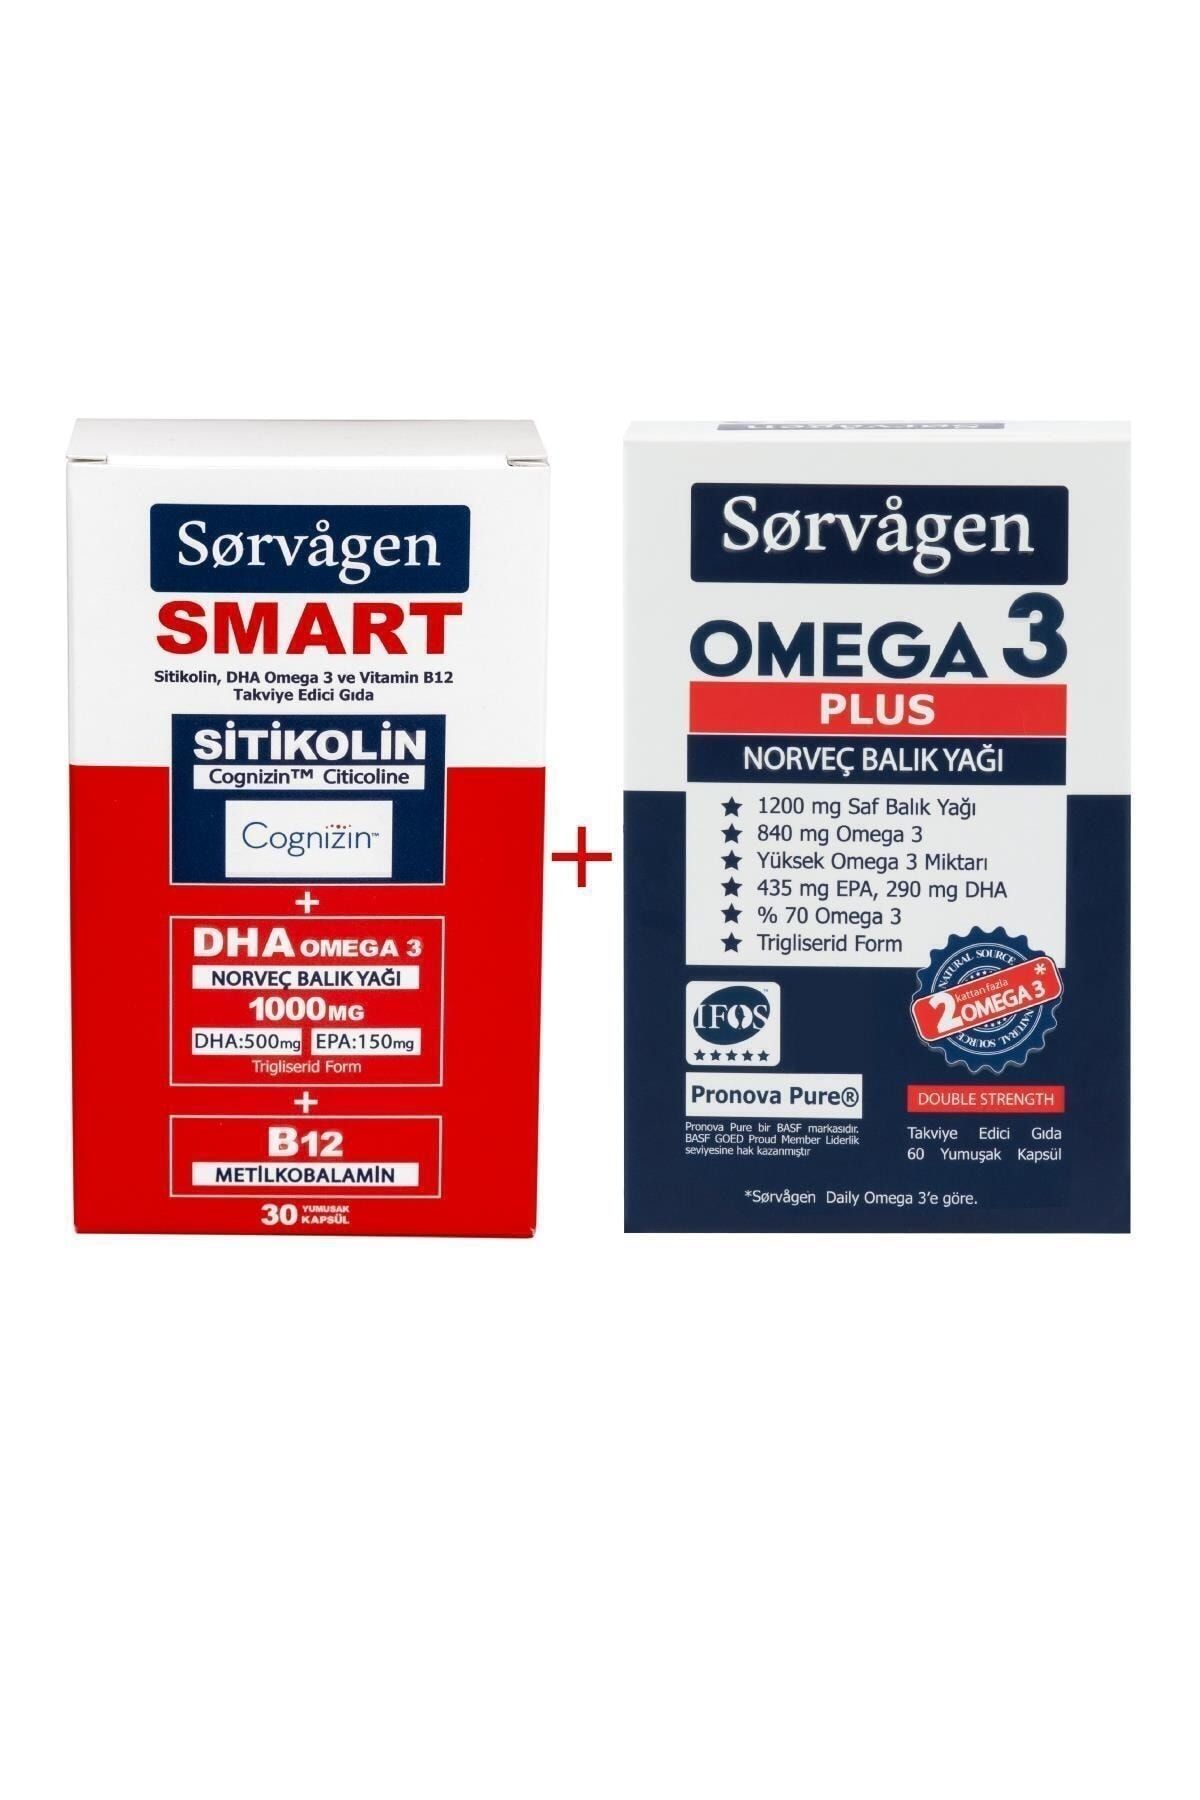 Sorvagen Smart Sitikolin, Dha Omega 3, B12 (30 Kapsül) + Omega 3 Plus Norveç Balık Yağı